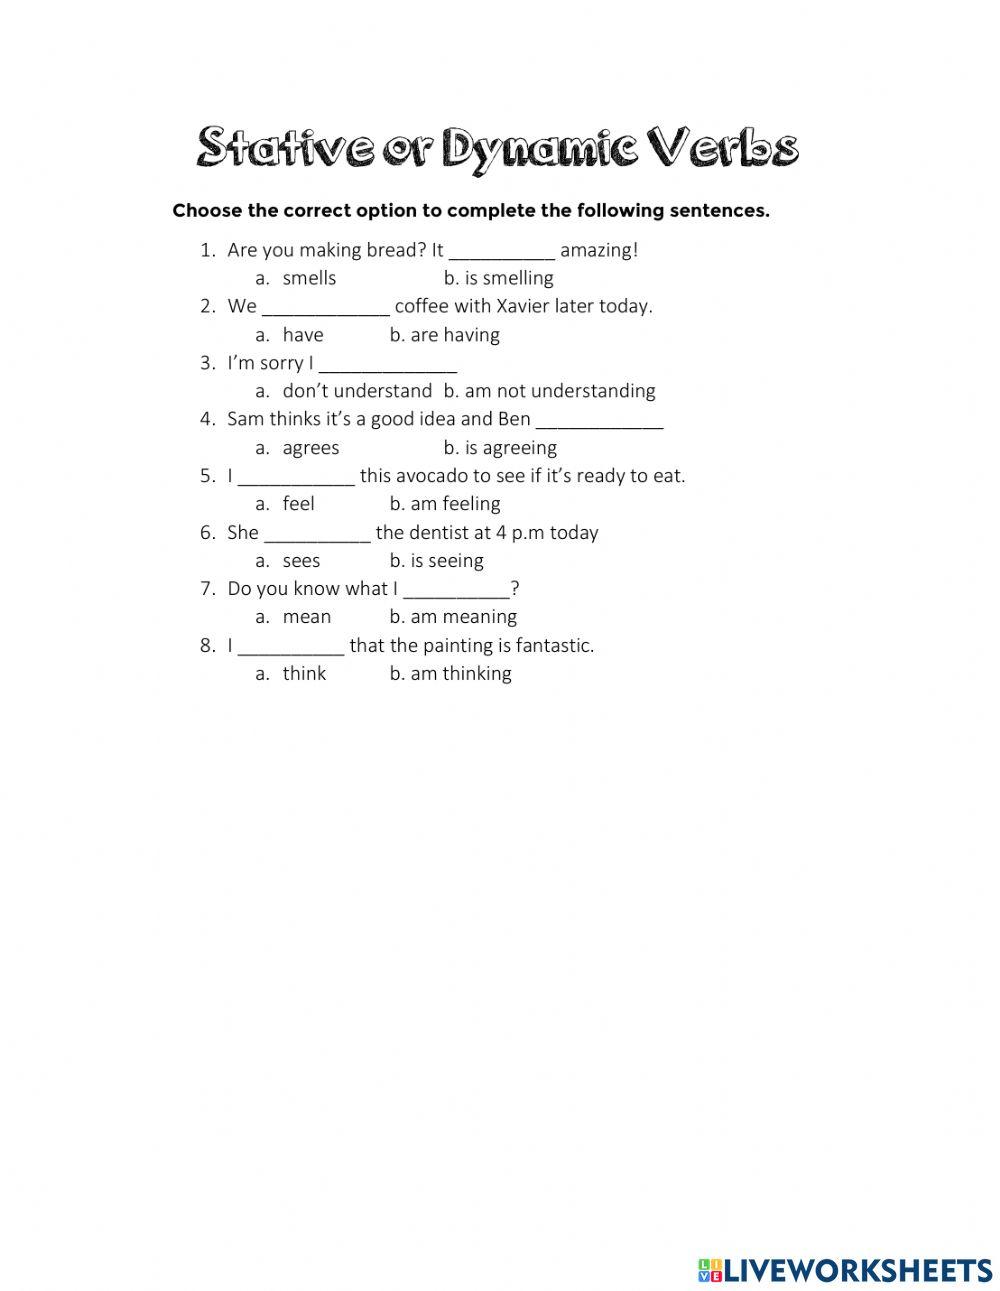 Stative or Dynamic Verbs